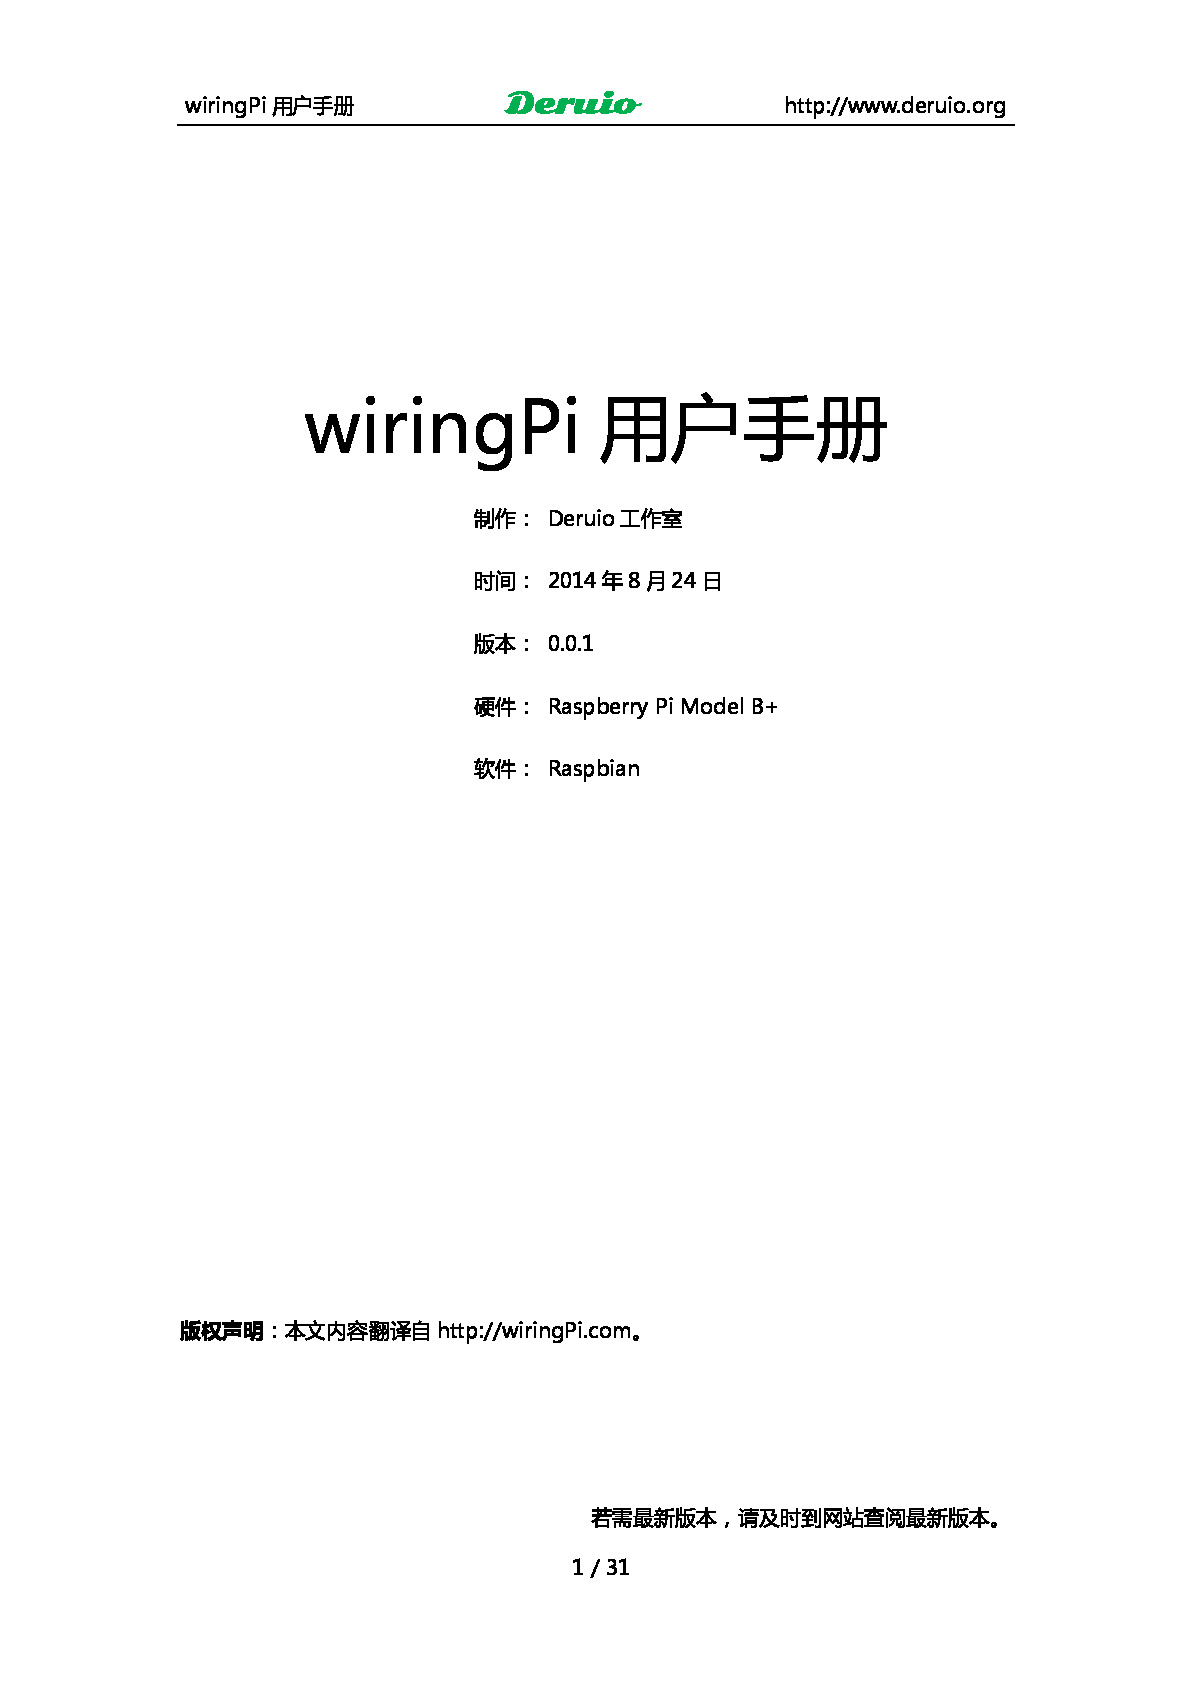 wiringPi用户手册V001